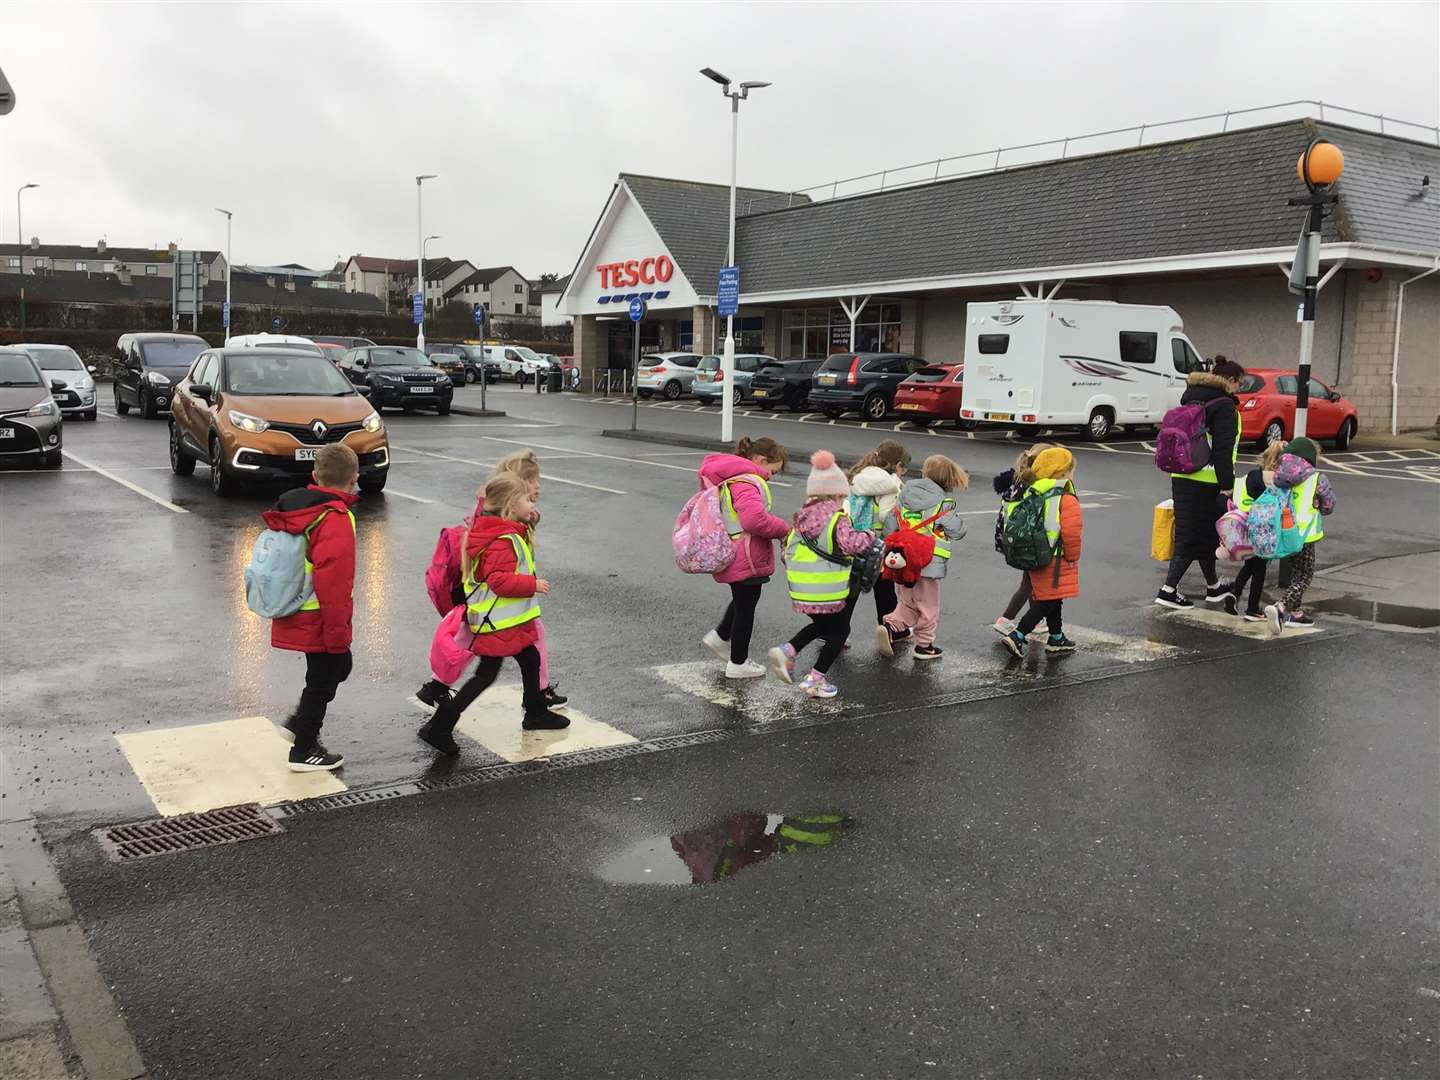 Children on their way to Tesco.